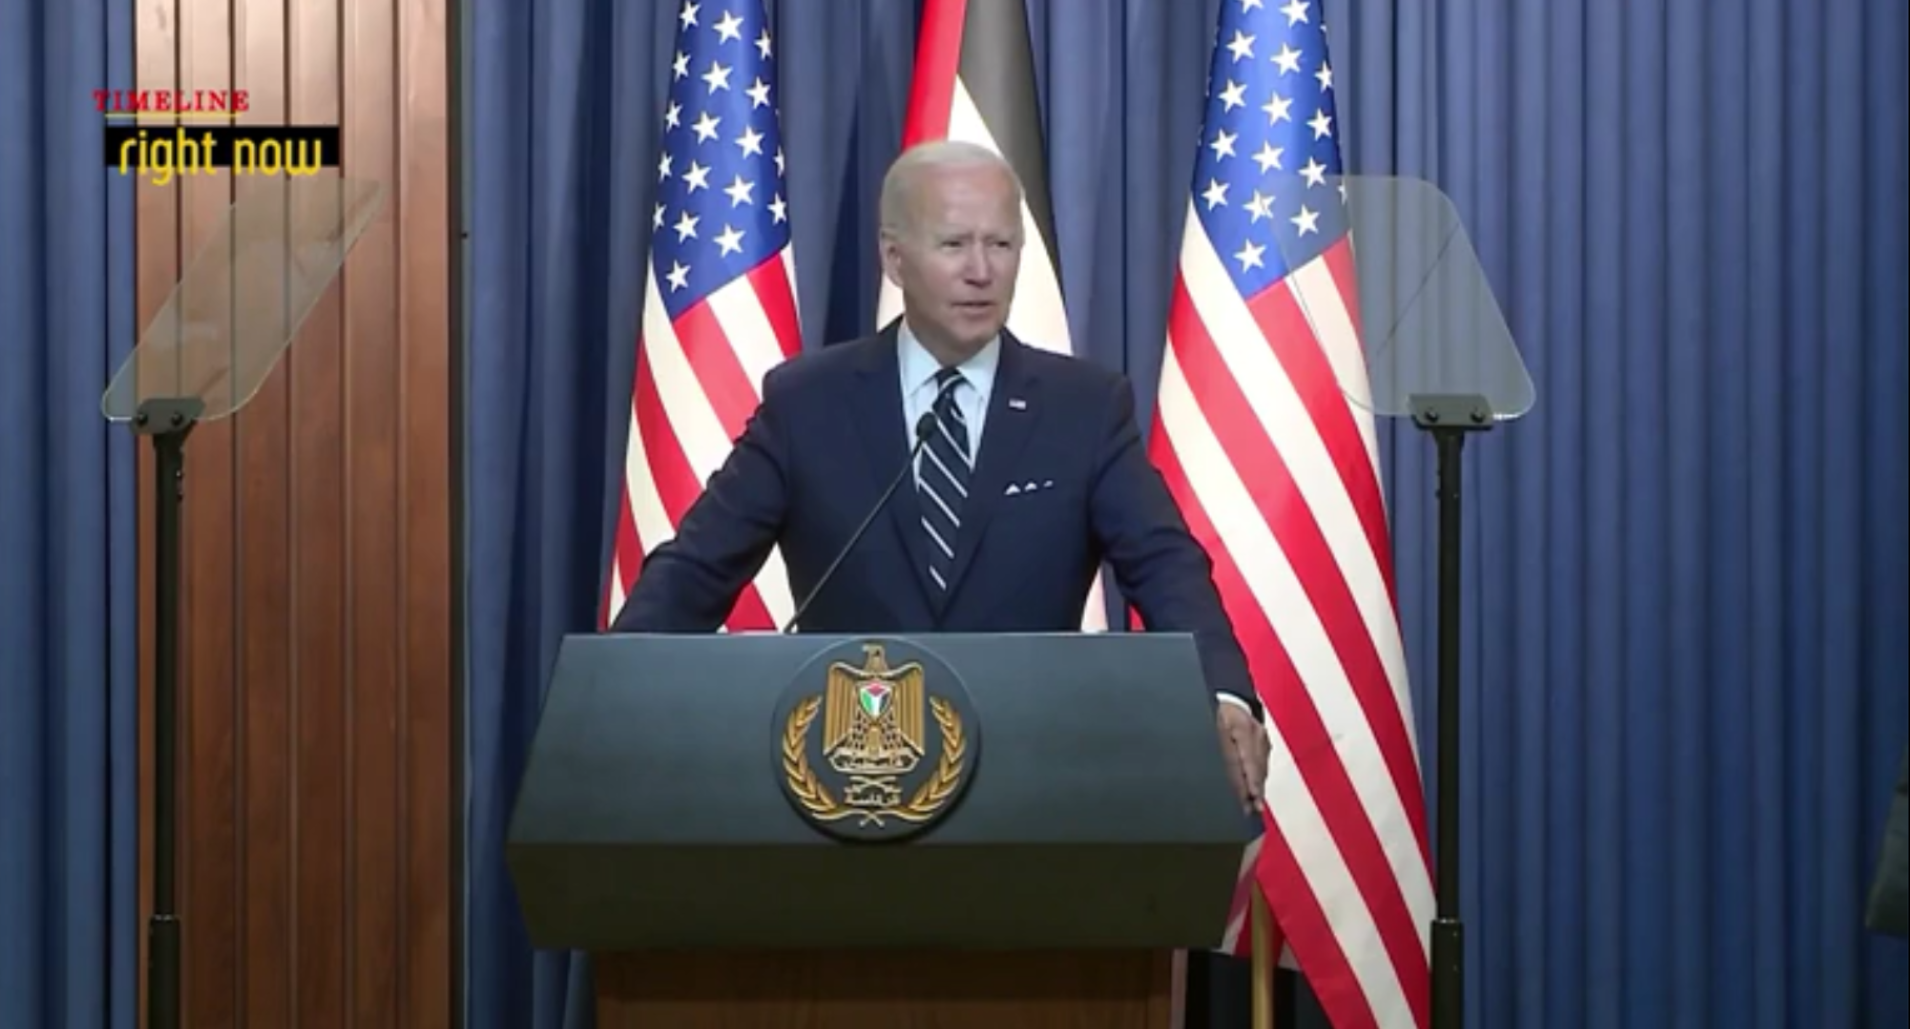 Joe Biden Makes Incredible Gaffe About 'Sending Covid-19' to West Bank and Gaza